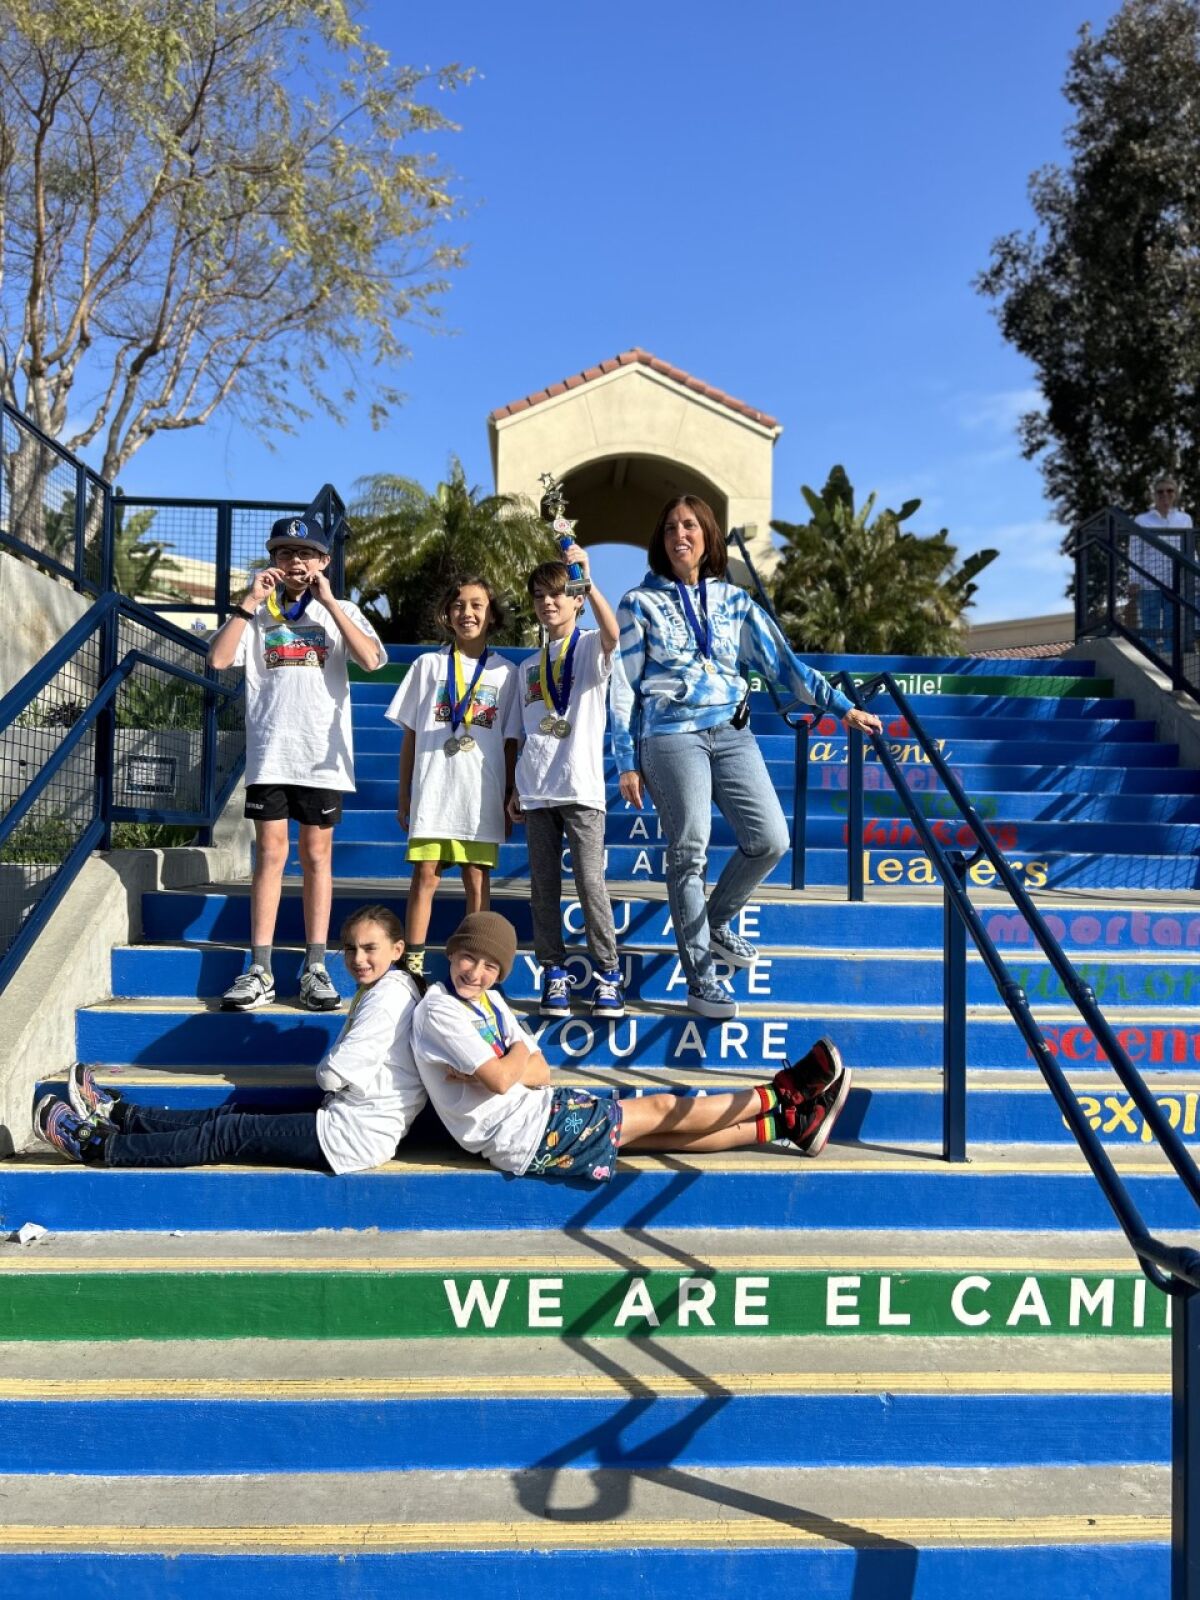 The El Camino Creek 6th grade team with Principal Jodi Greenberger.